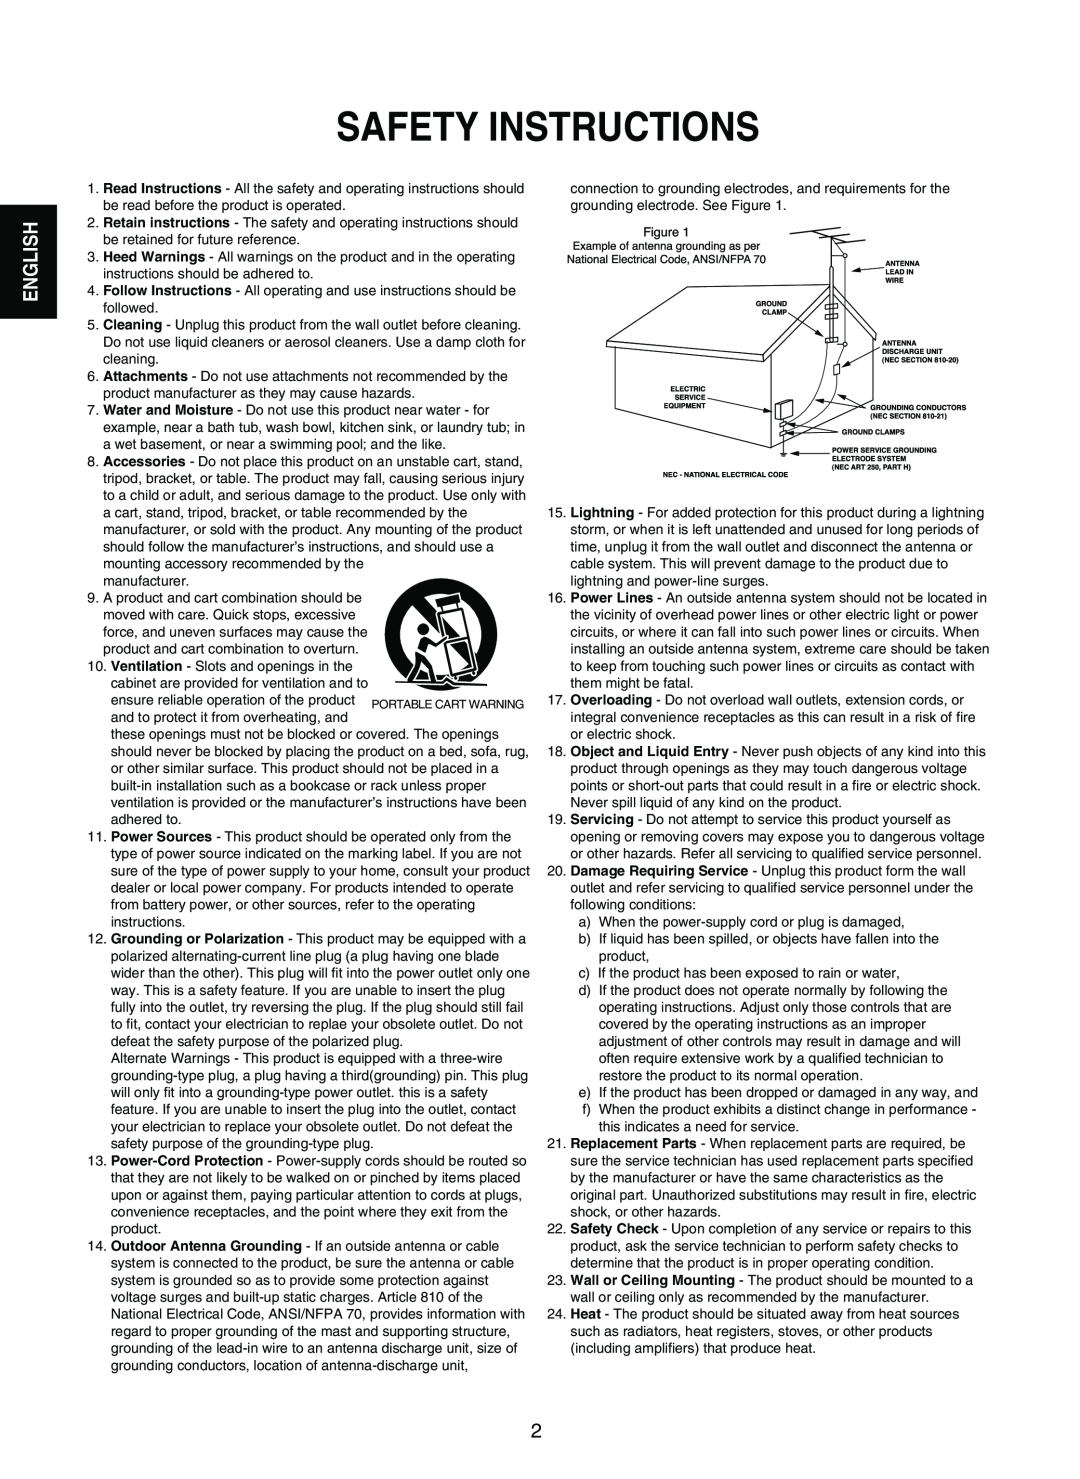 Sherwood RD-7502 manual English, Safety Instructions 